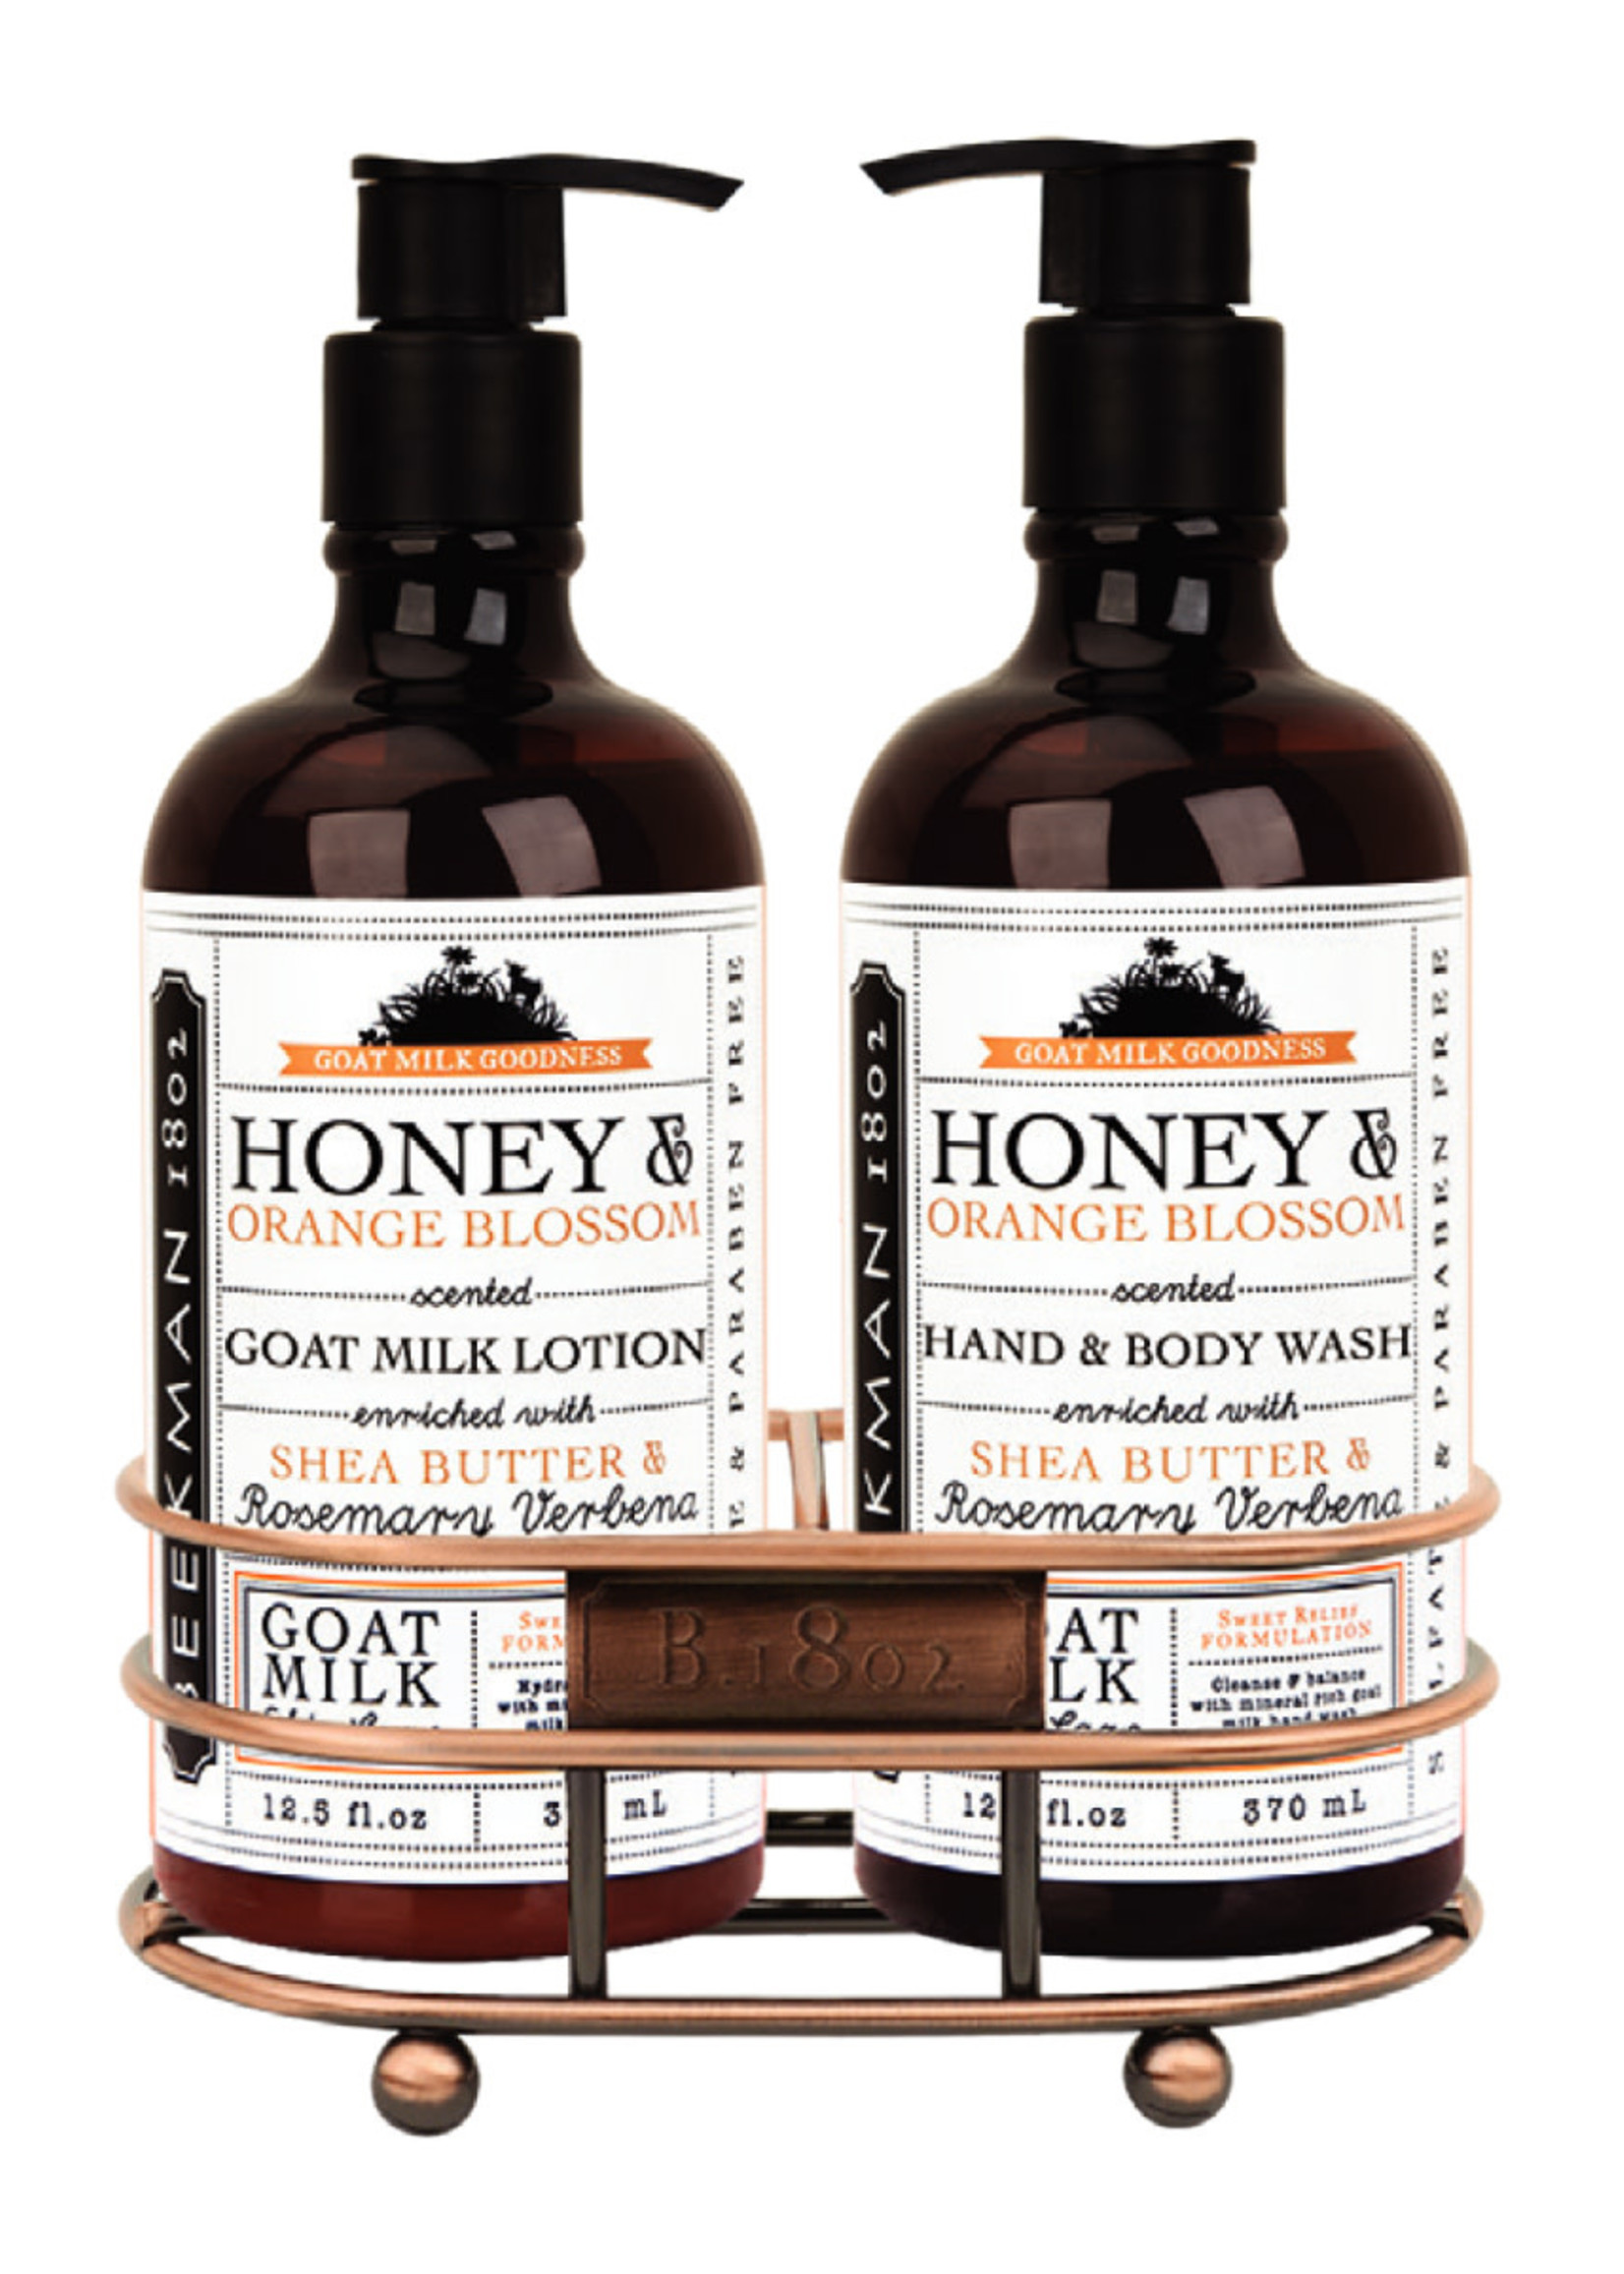 Beekman 1802 Hand & Body Wash Honey & Orange Blossom